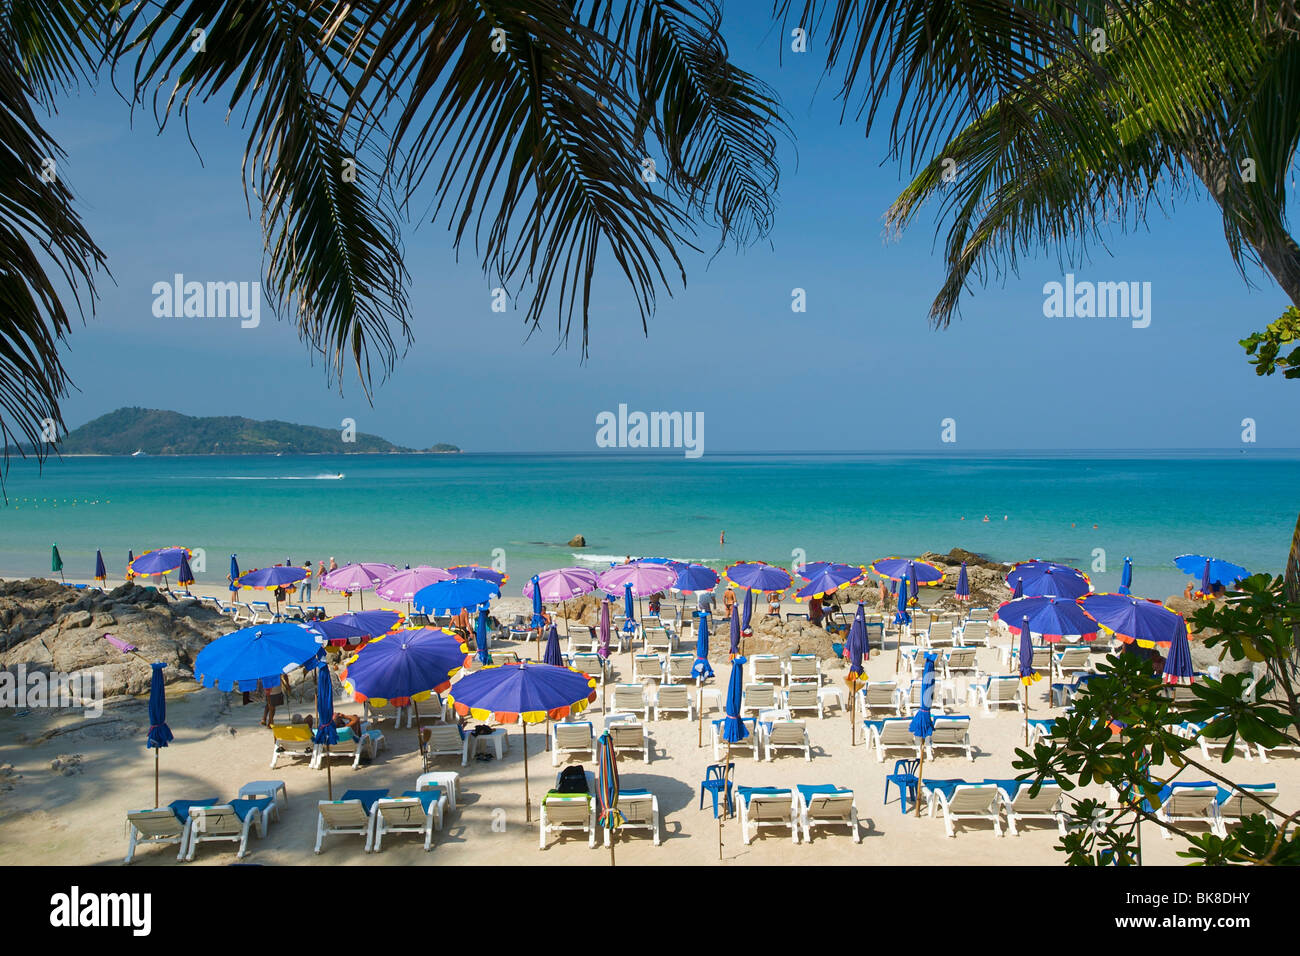 Kalim beach phuket island hi-res stock photography and images - Alamy